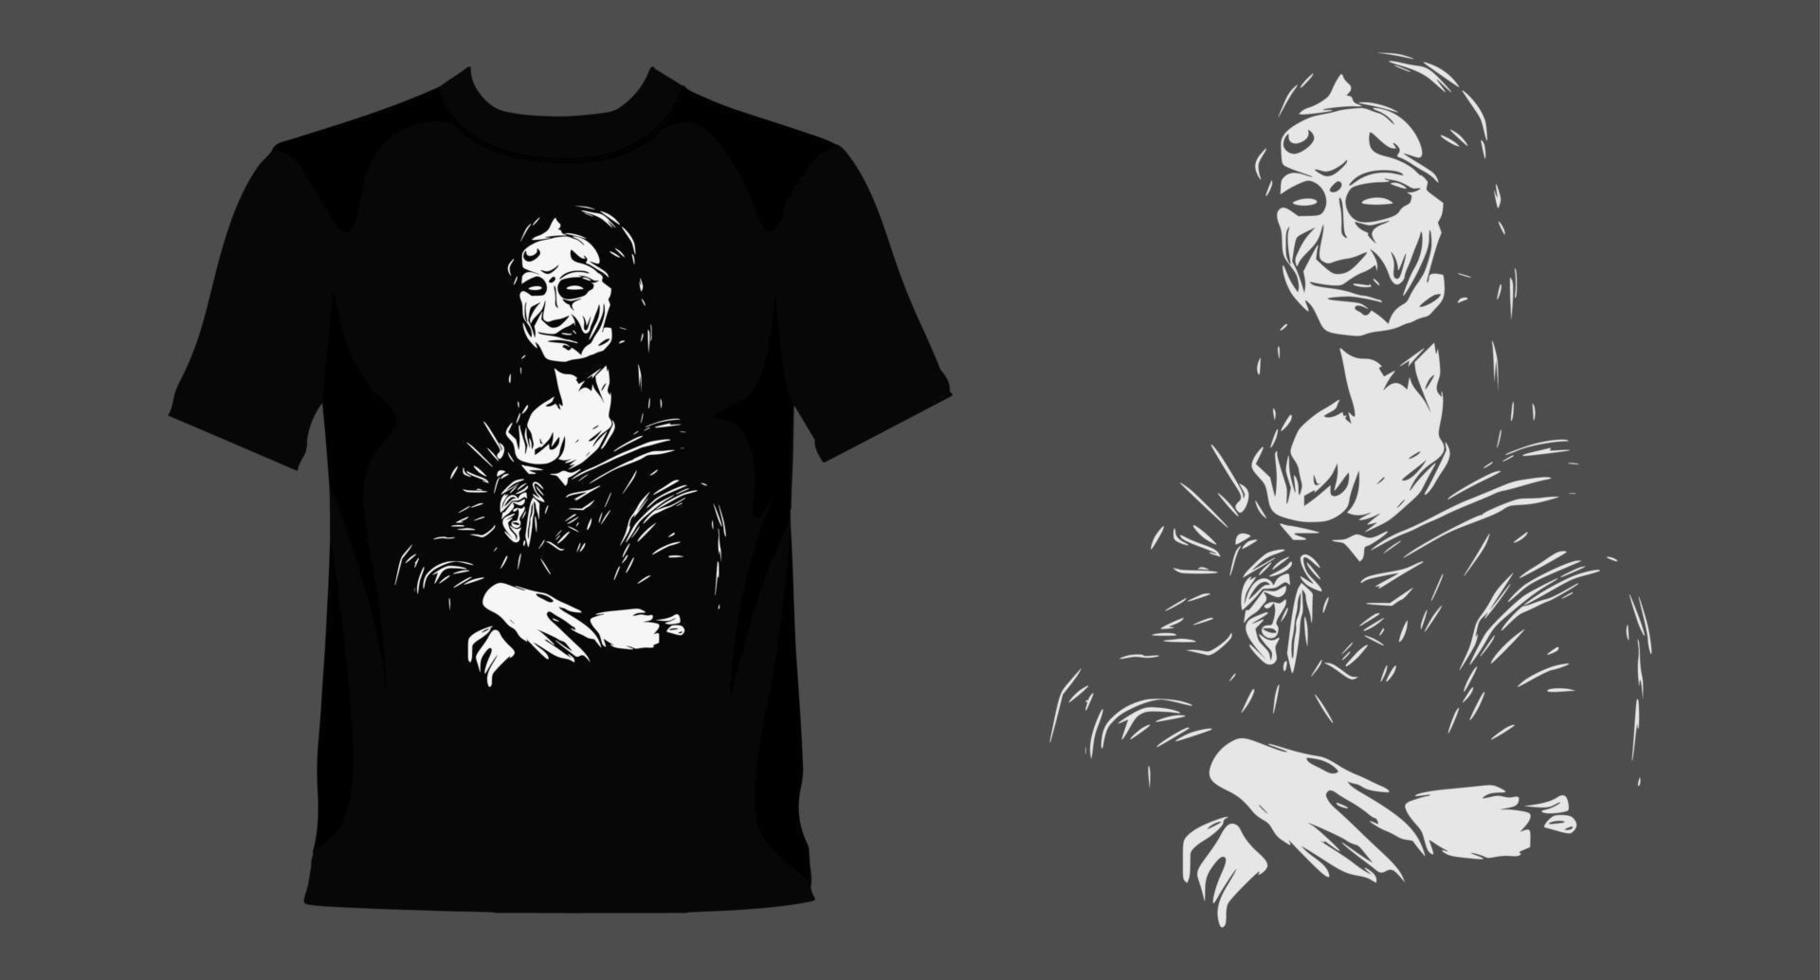 Never Smile Mona graphic design, for t-shirt prints, vector illustration